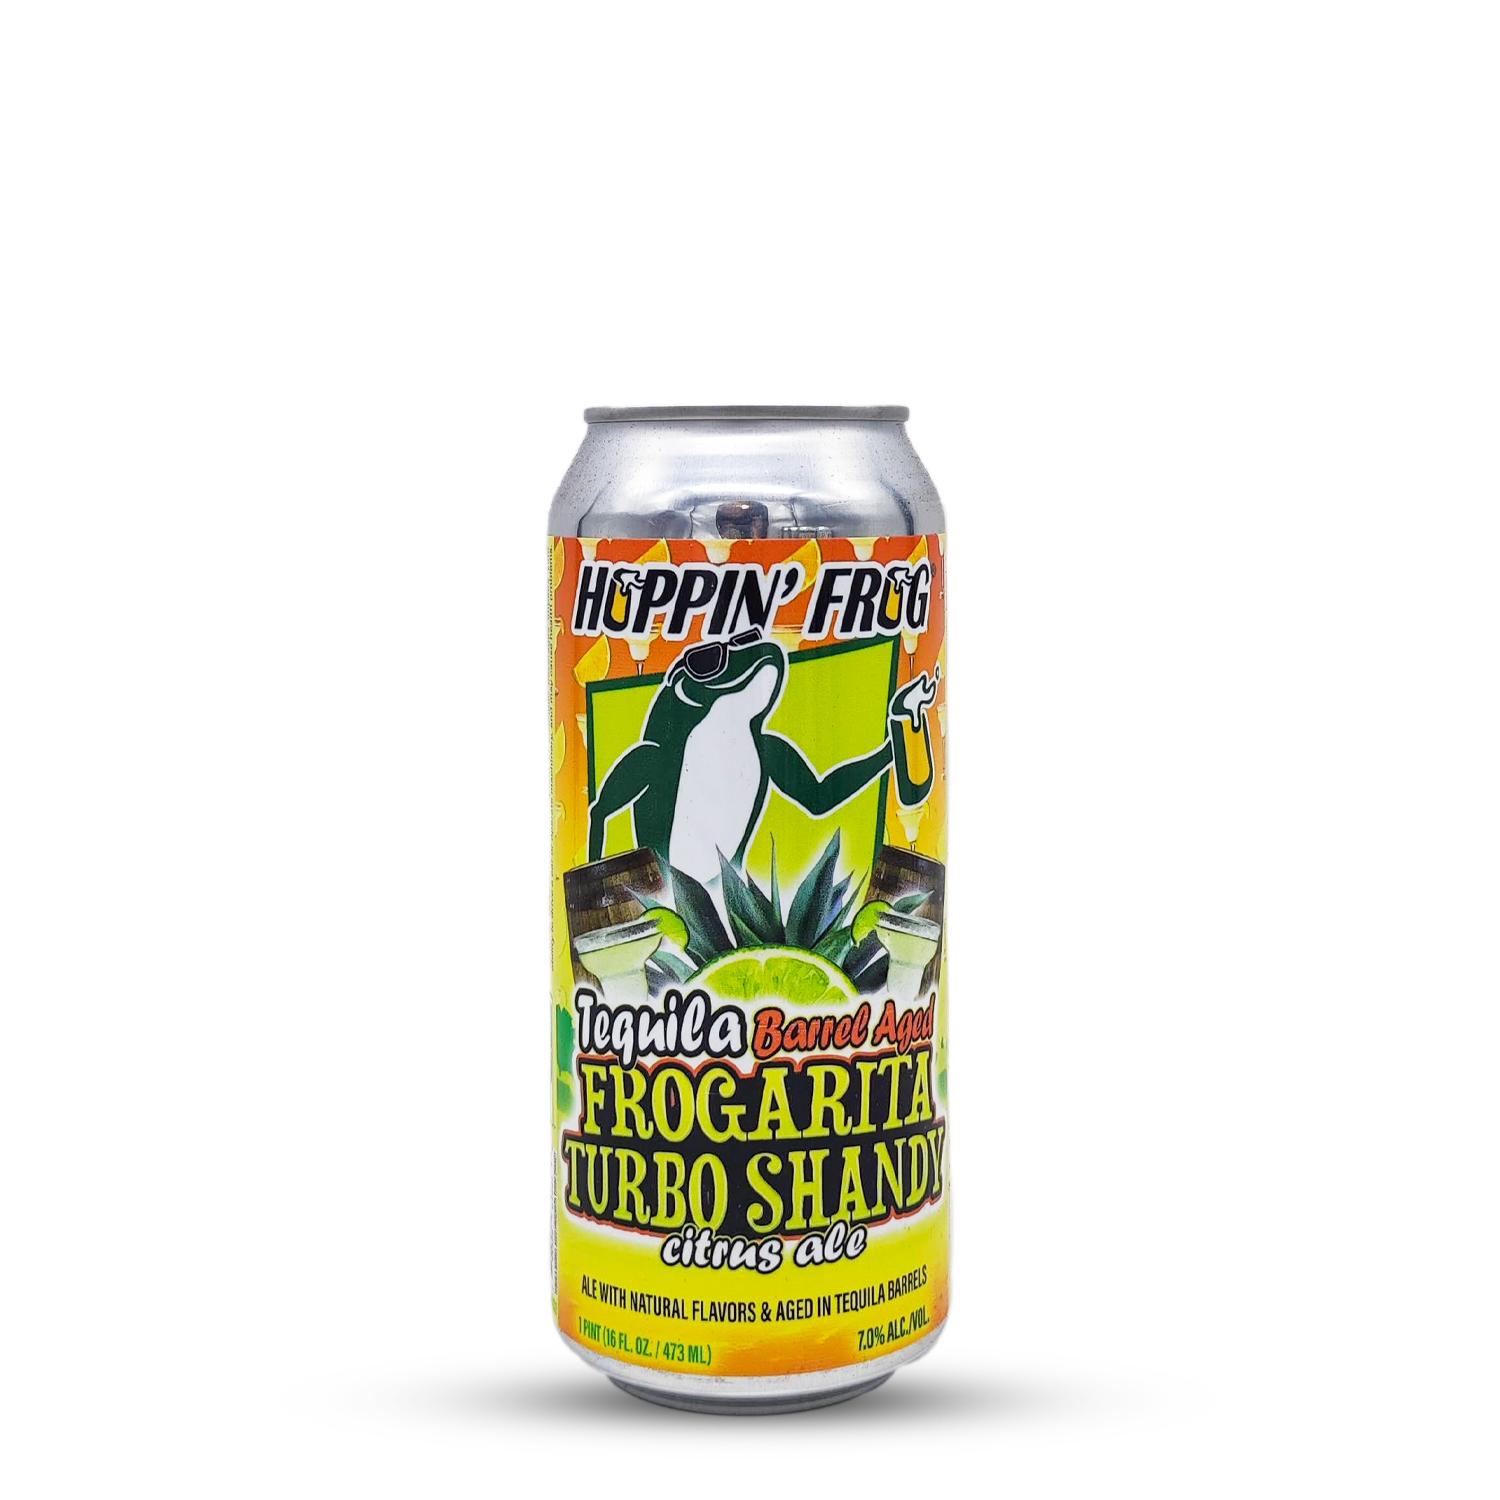 Tequila Barrel-Aged Frogarita Turbo Shandy Citrus Ale | Hoppin' Frog (USA) | 0,473L - 7%